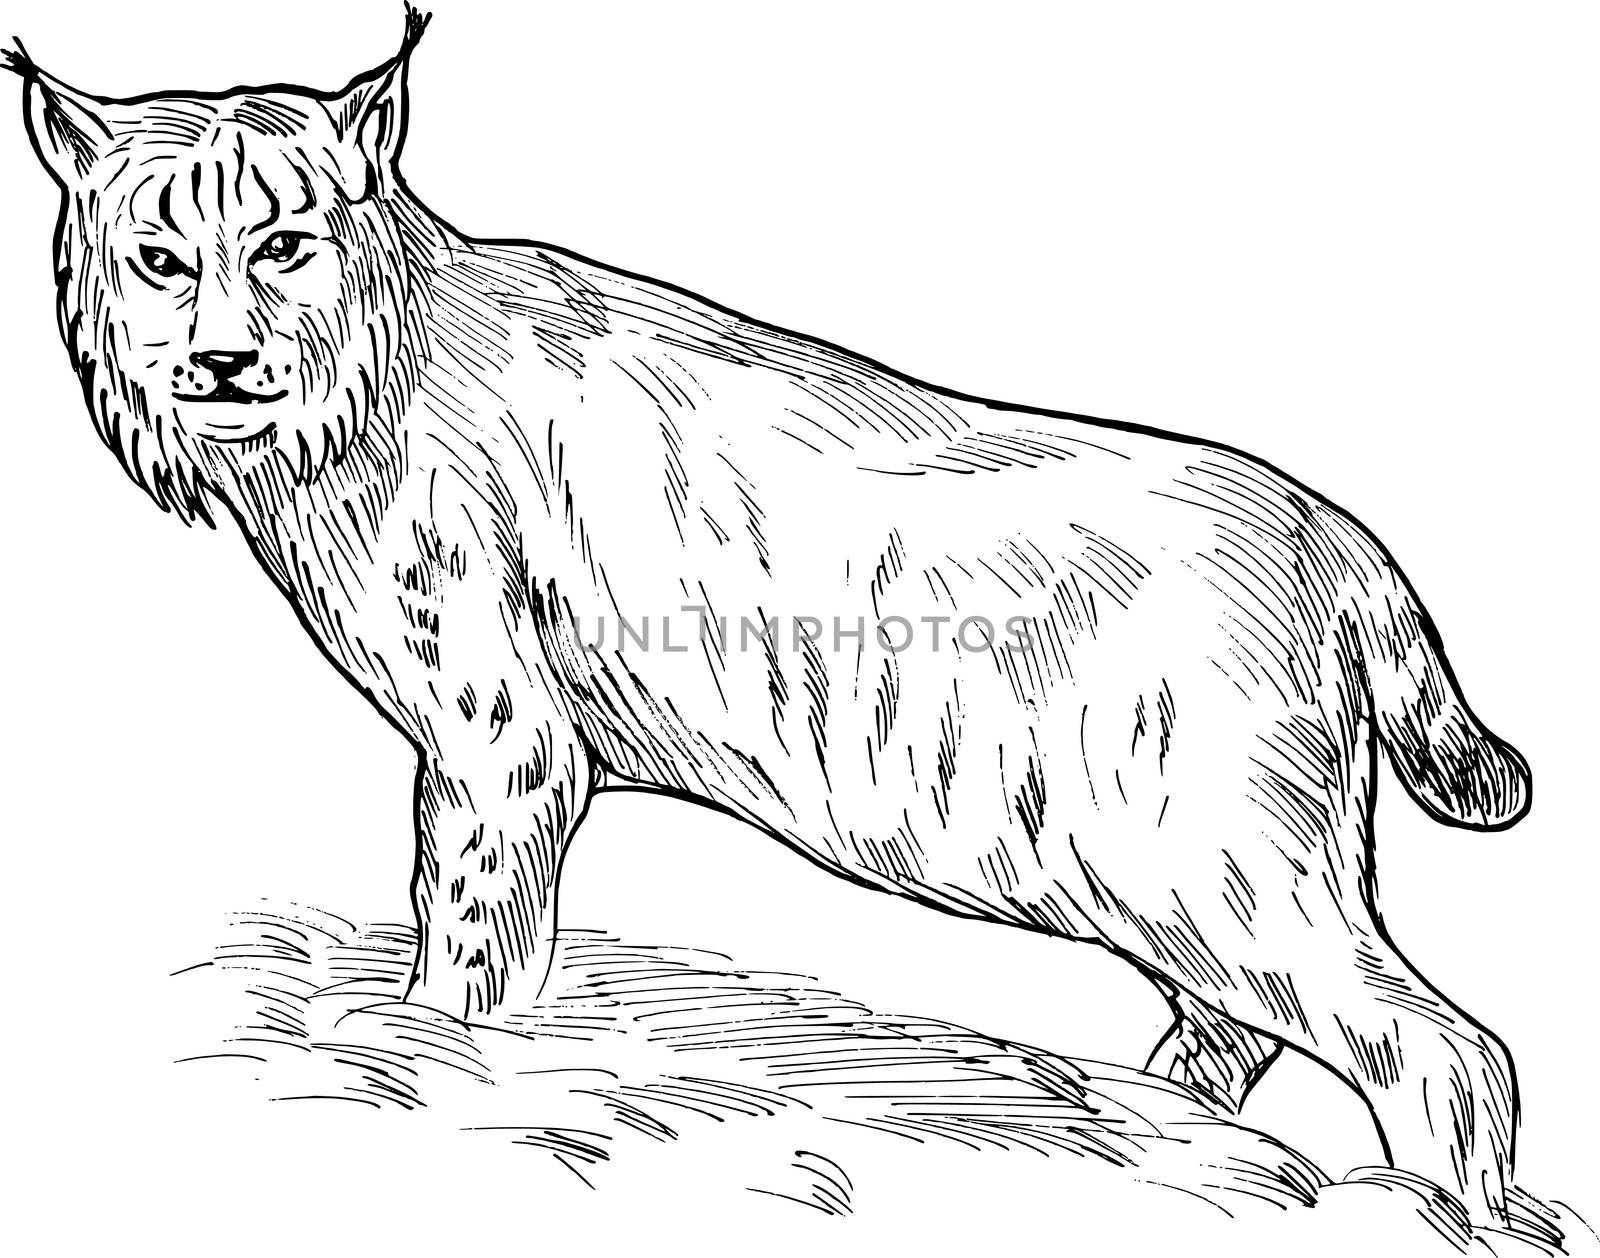 Eurasian lynx drawing by patrimonio